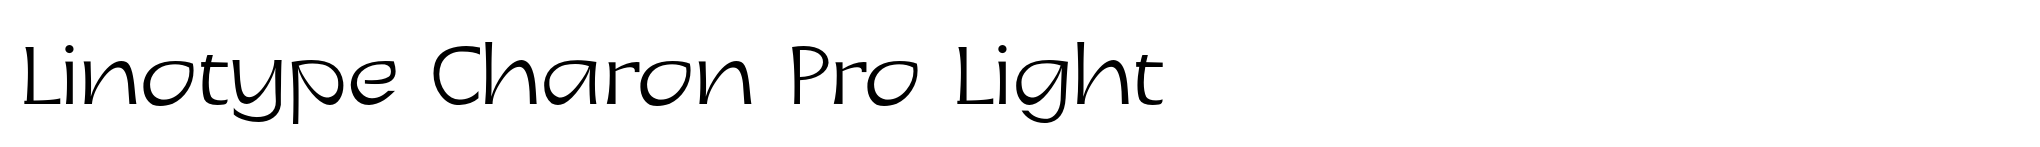 Linotype Charon Pro Light image